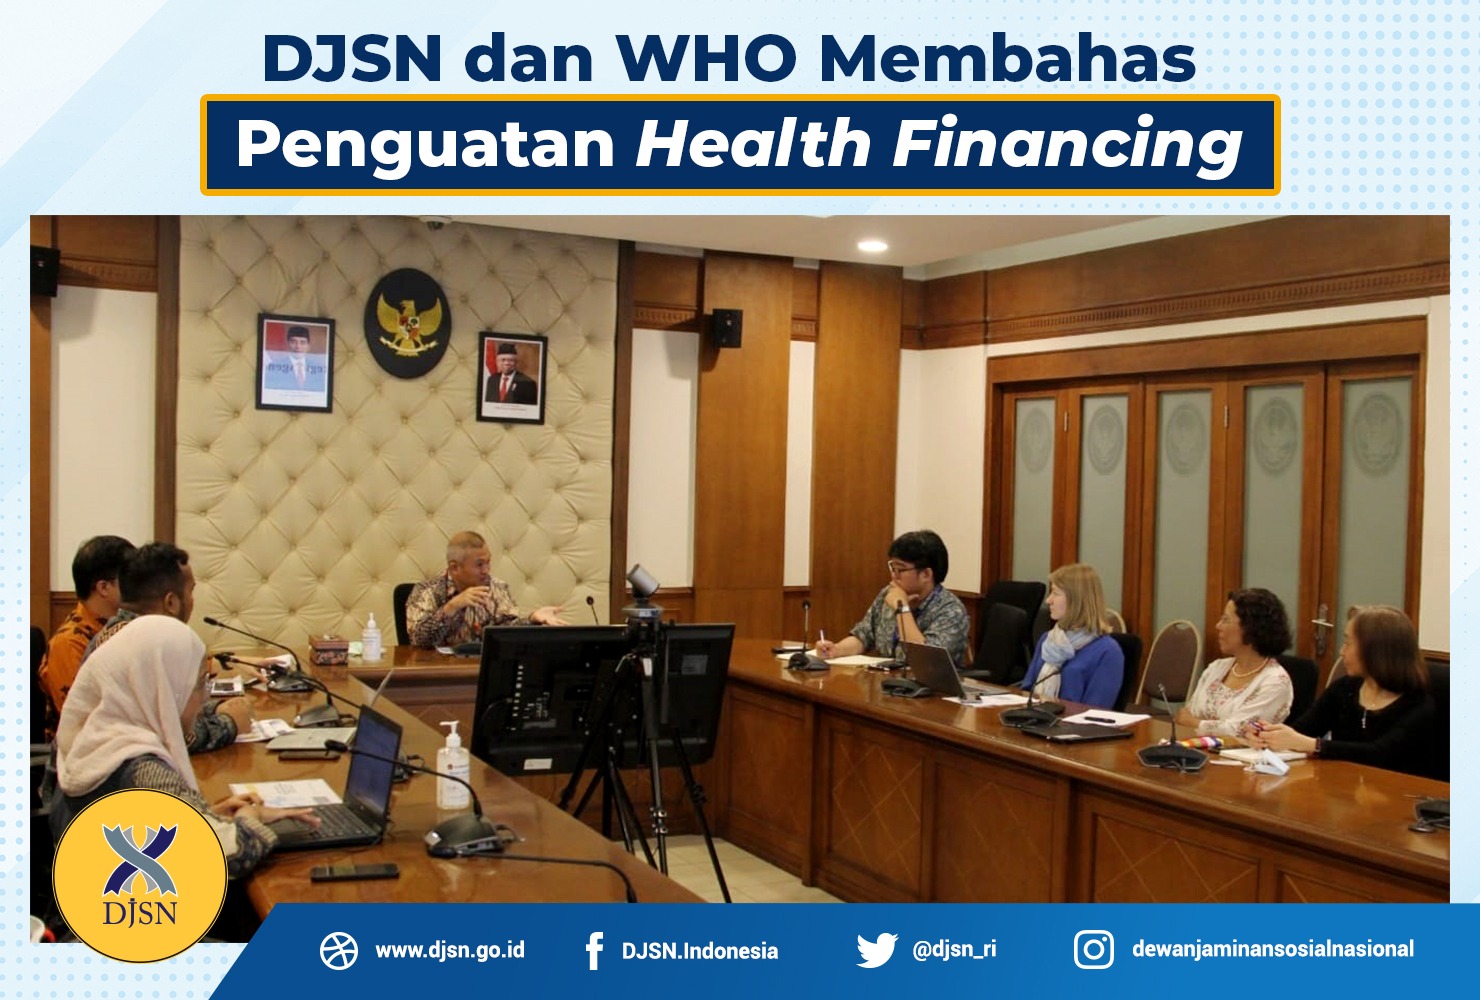 DJSN dan WHO membahas Penguatan Health Financing